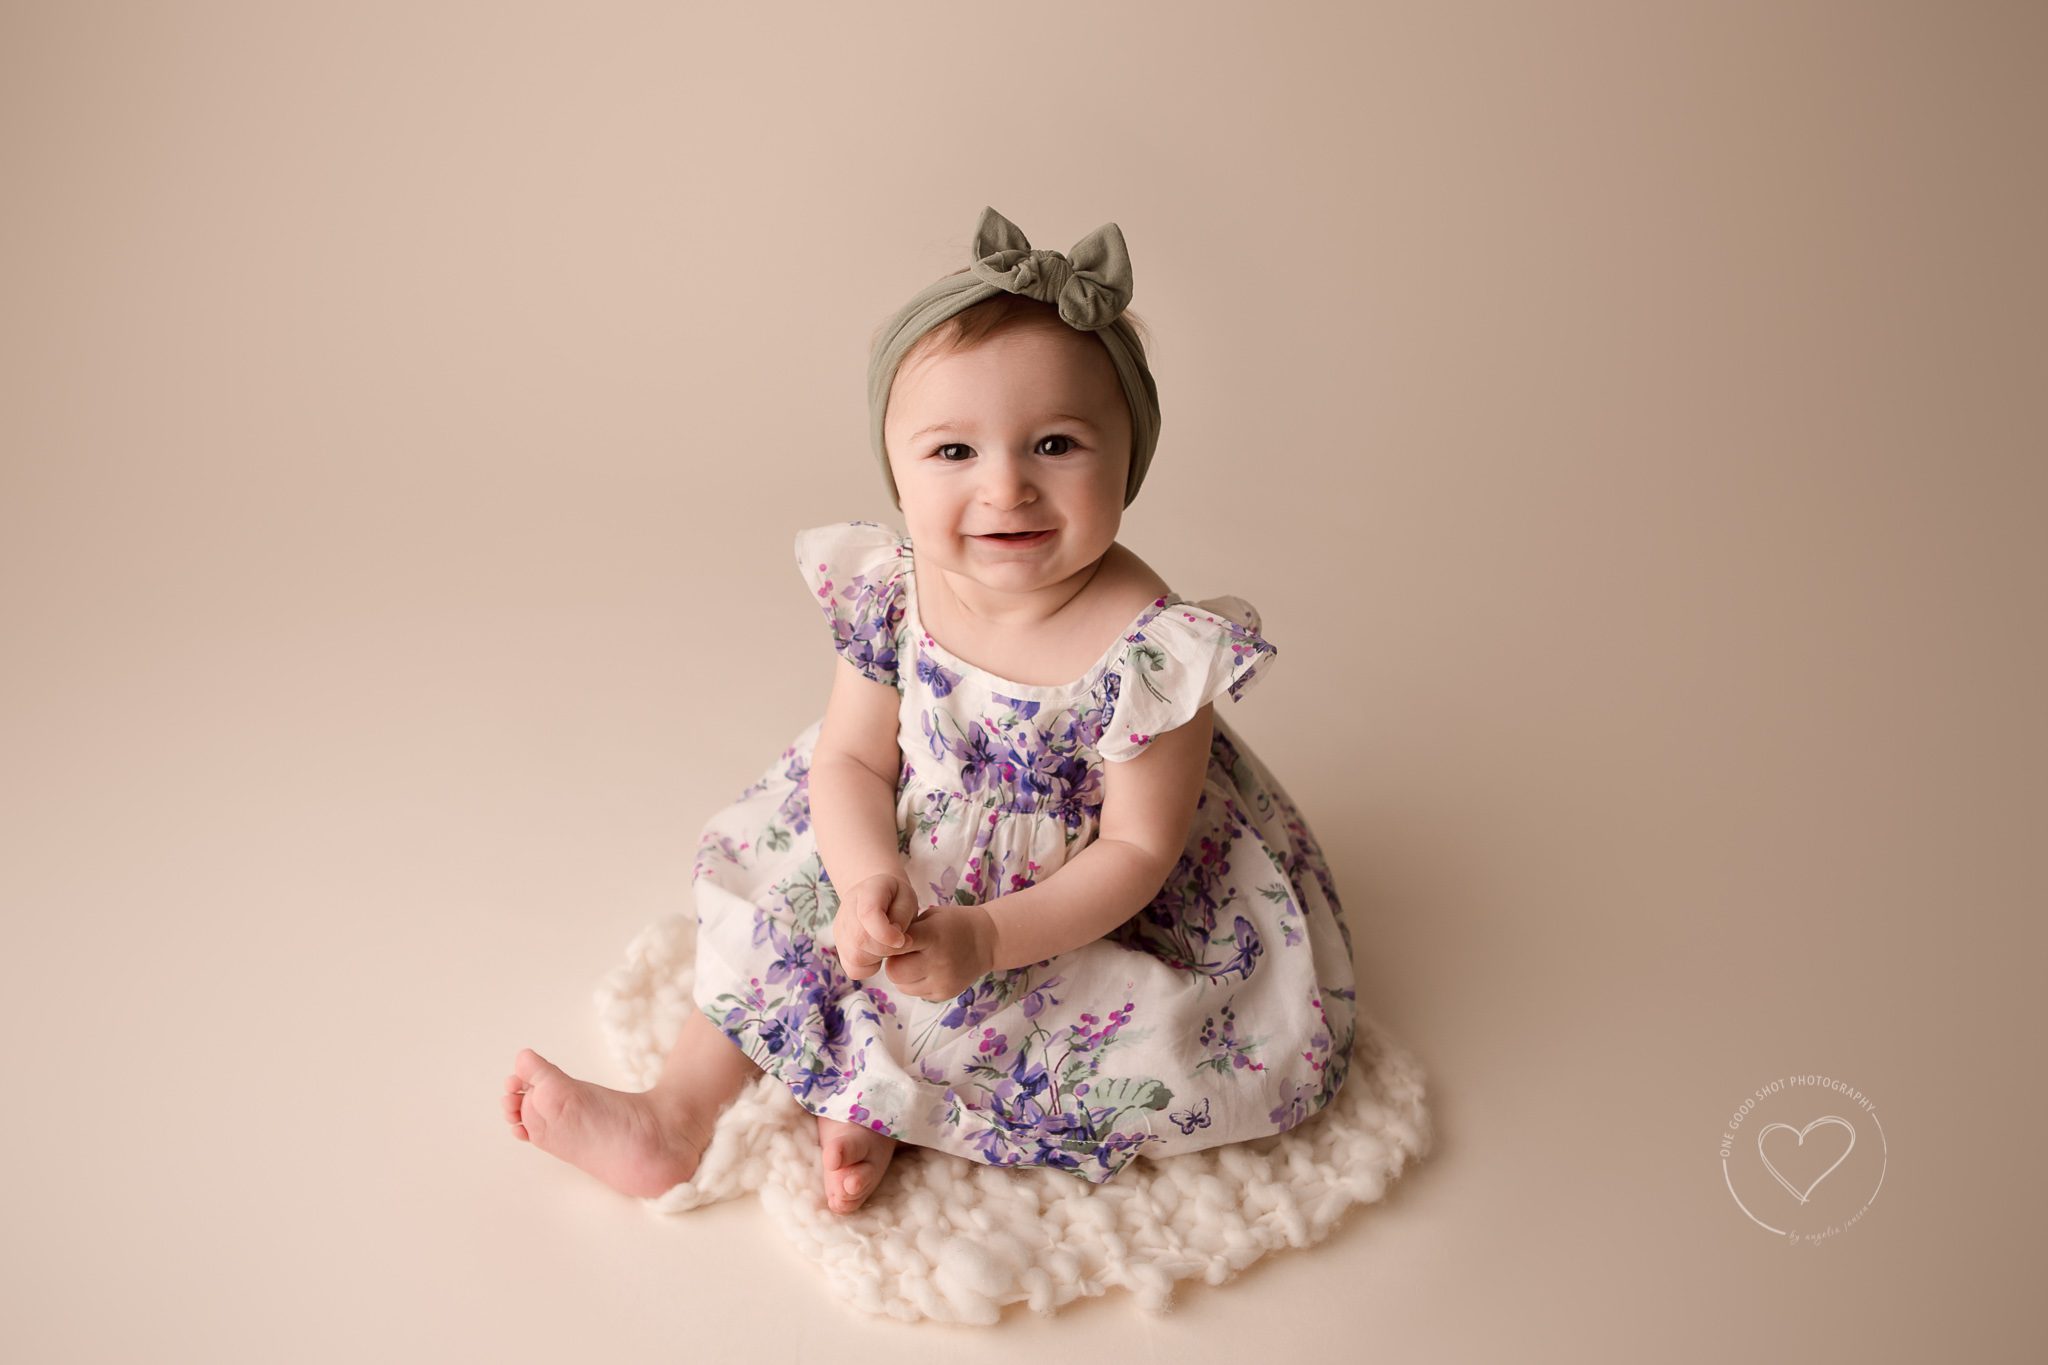 6 Month old baby girl wearing lavender floral dress, sitting, smiling